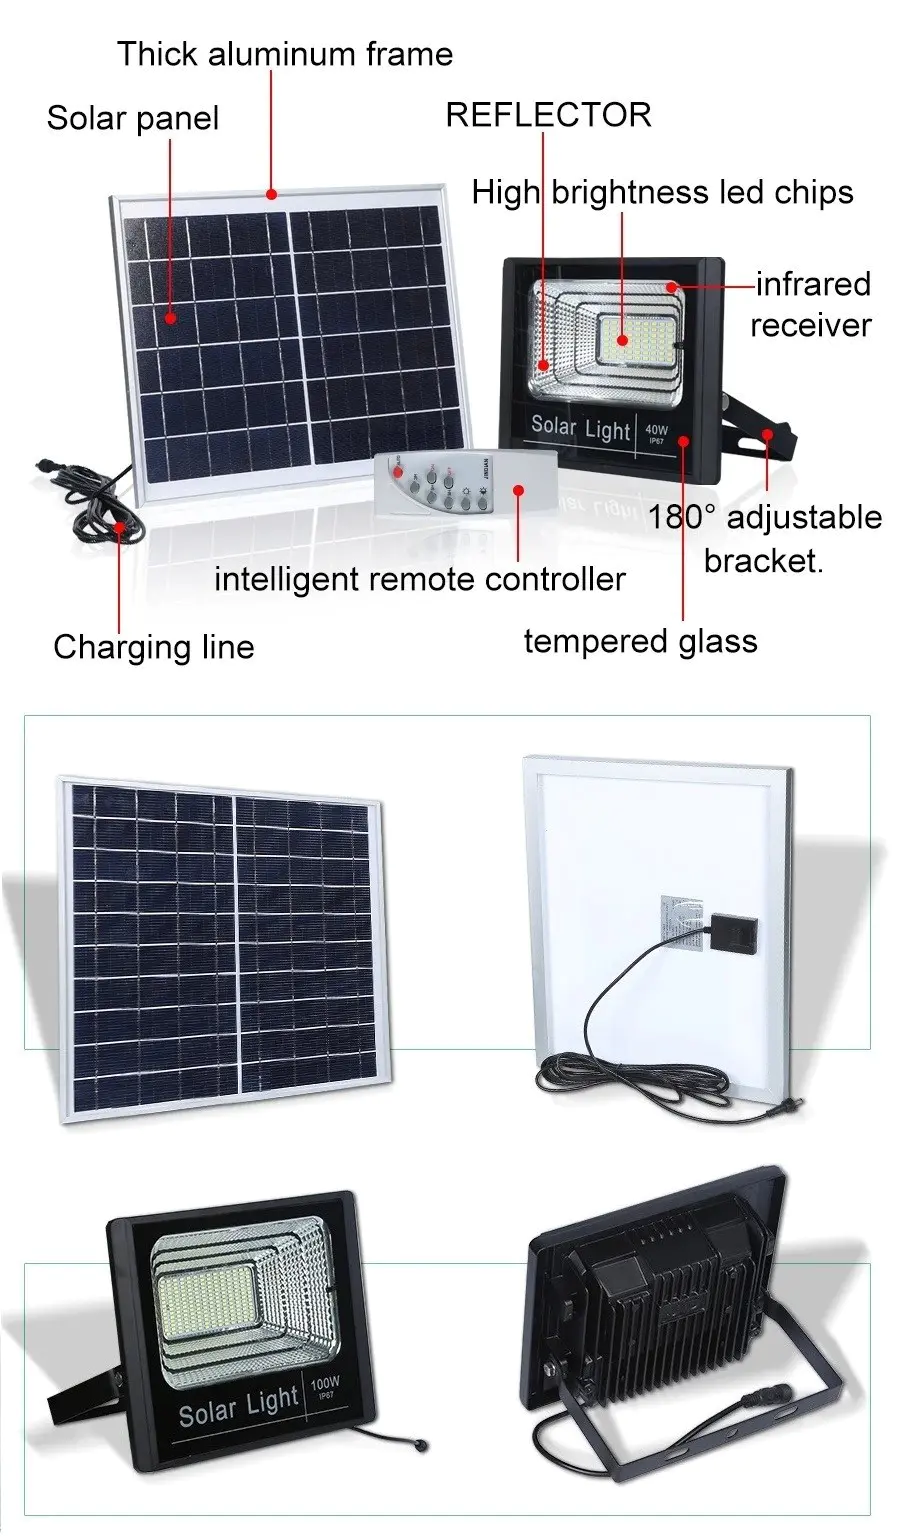 Litel Technology low cost best outdoor solar flood lights by bulk for factory